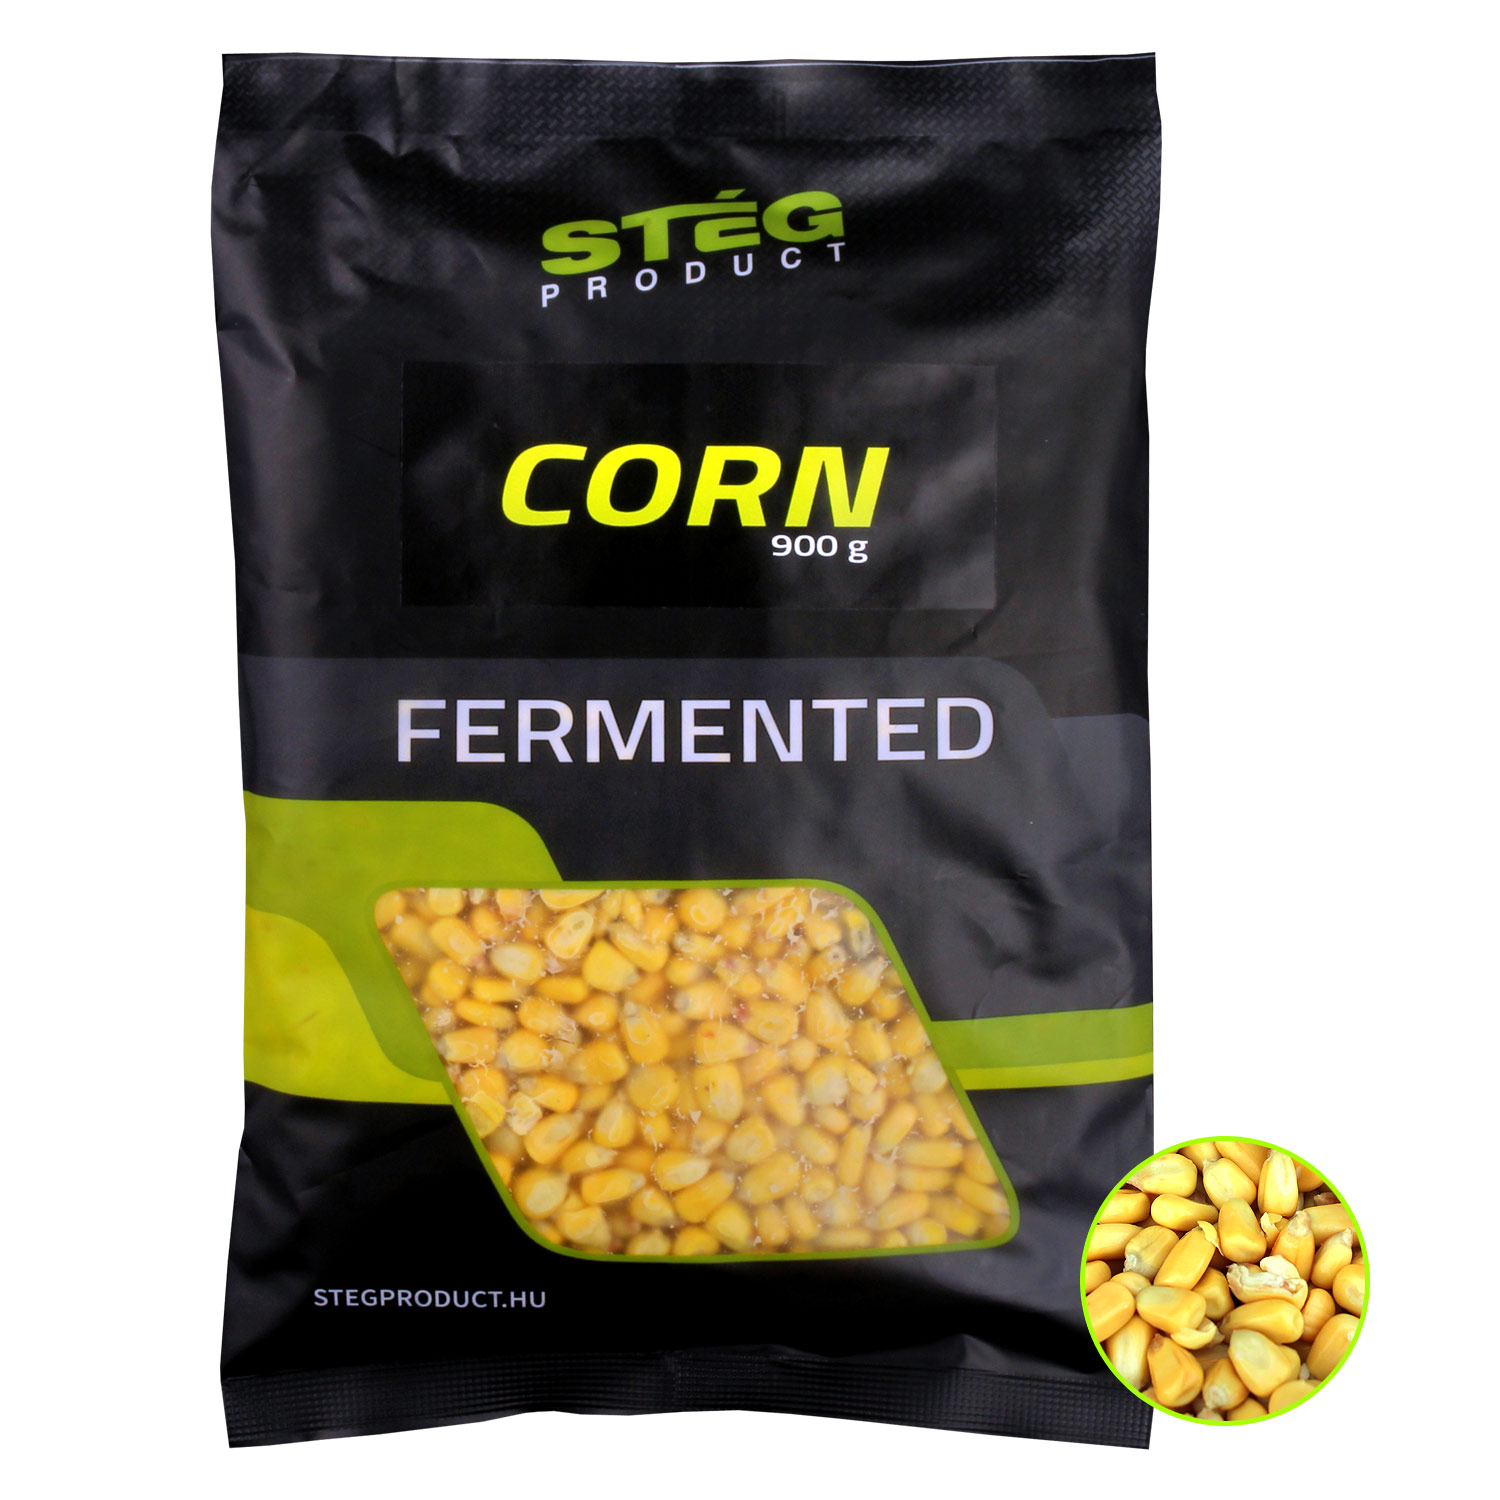 Stg Product Fermented Corn 900g